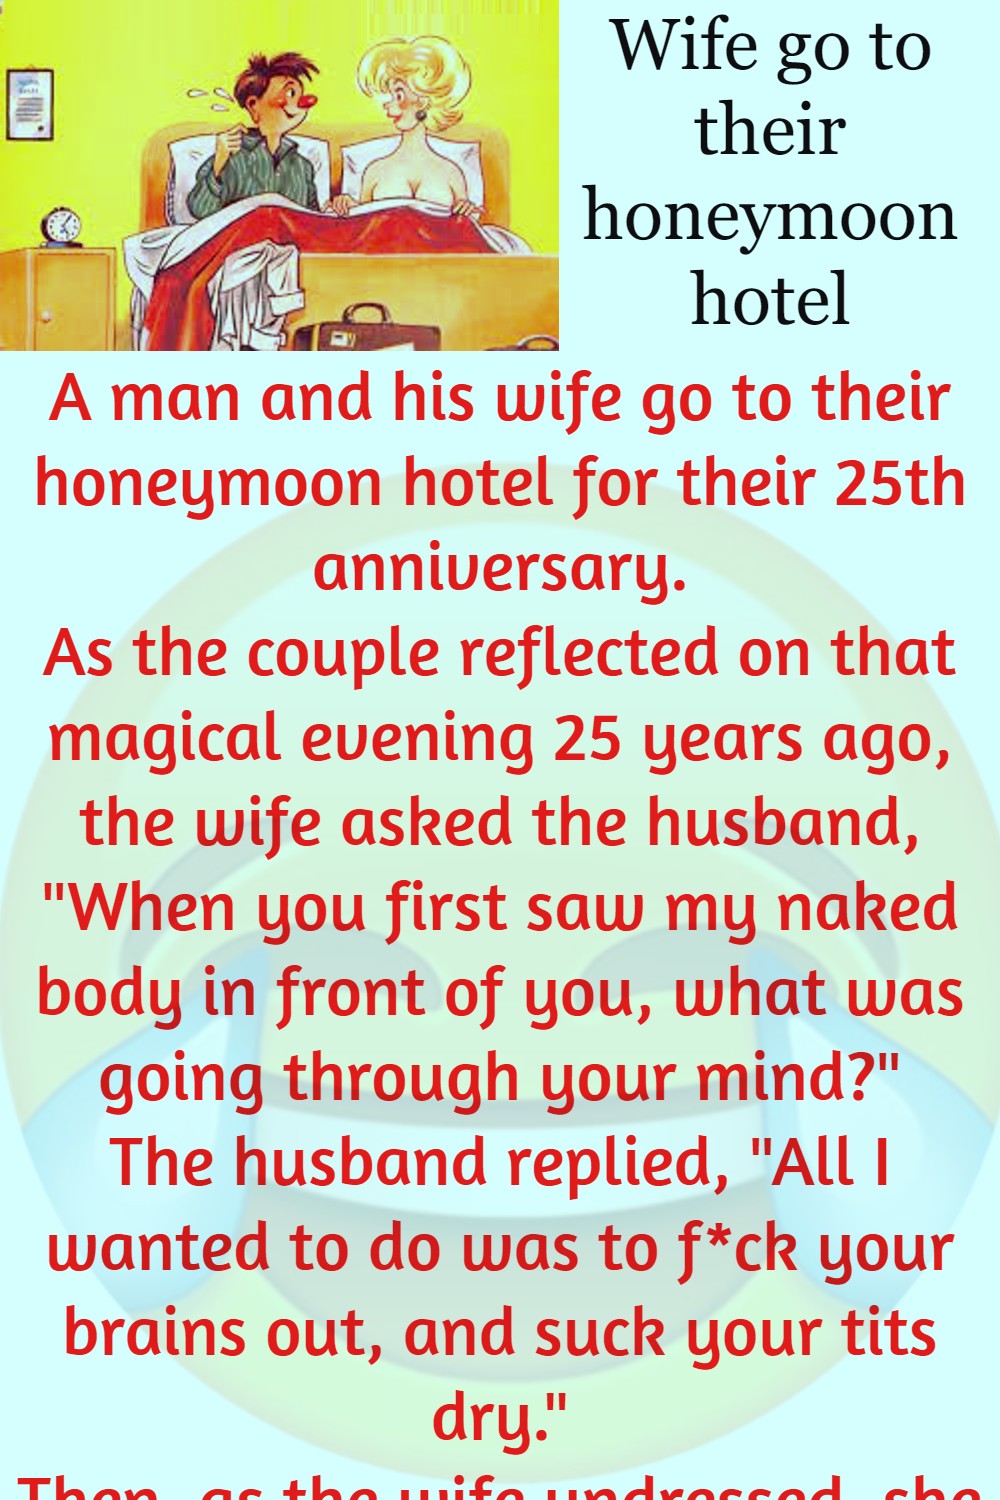 Wife go to their honeymoon hotel